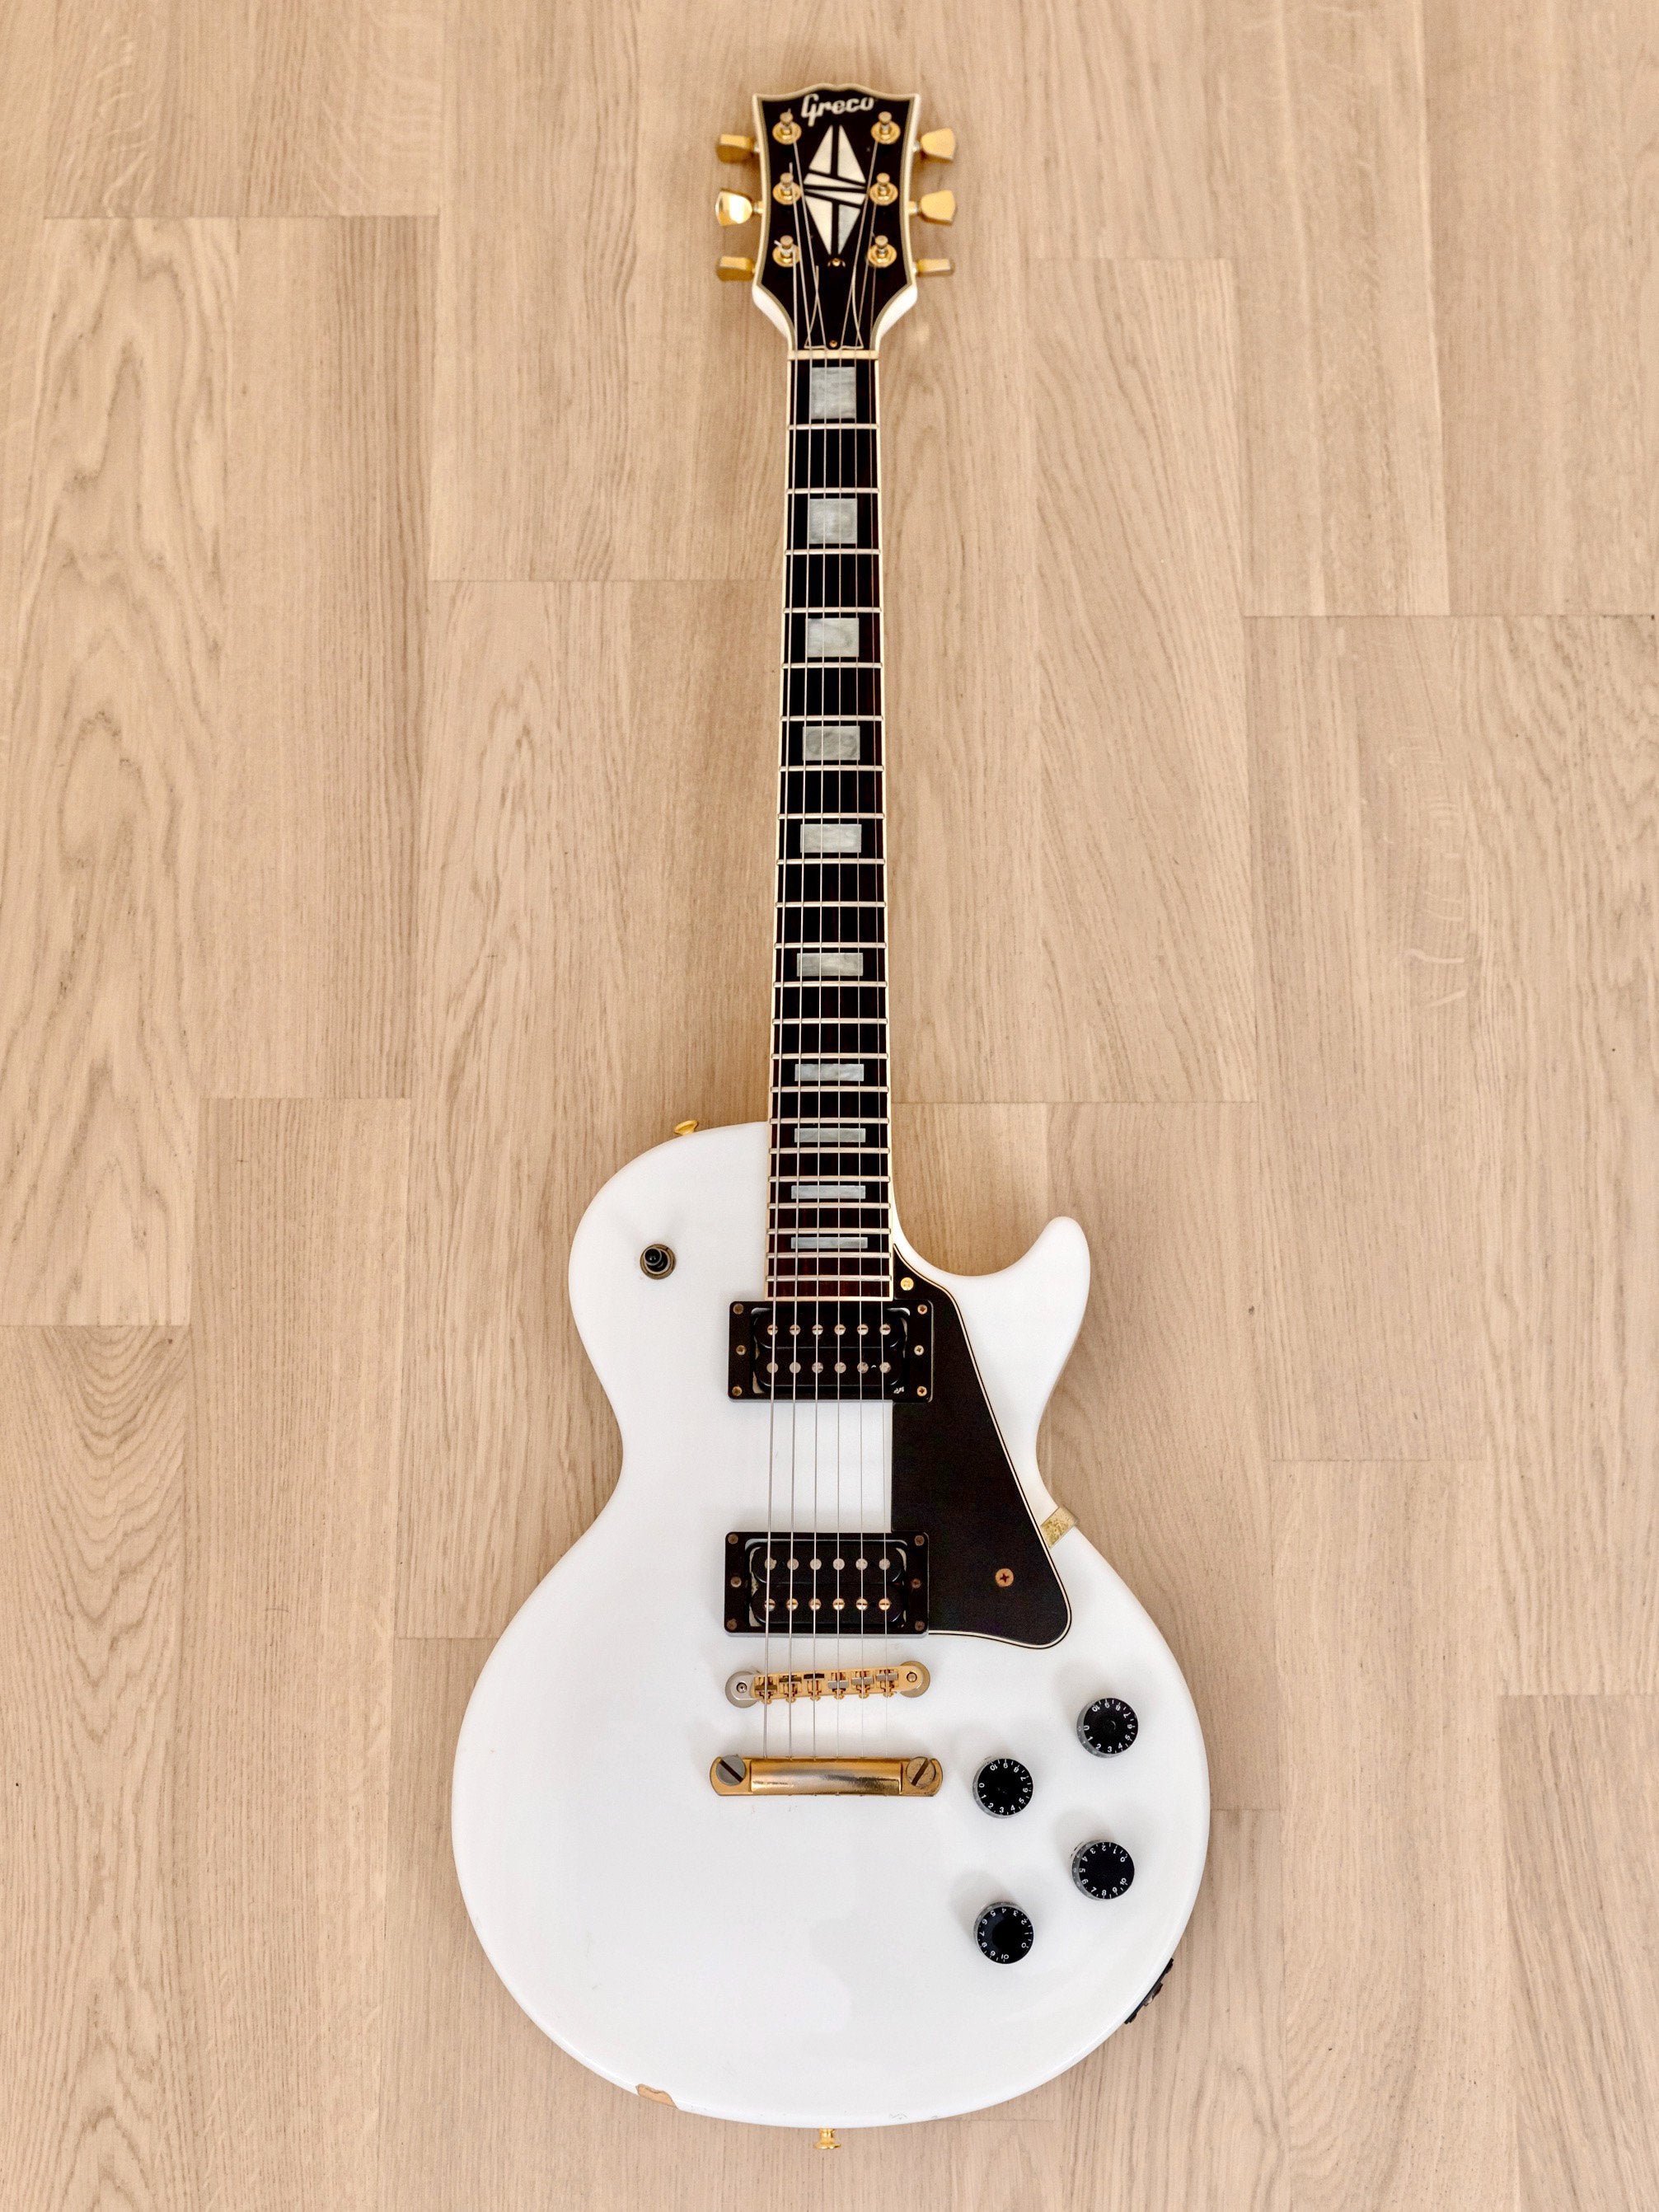 1990 Greco EGW-700 Electric Guitar Alpine White, Custom Lite w/ Screamin' PAFs, Japan Fujigen